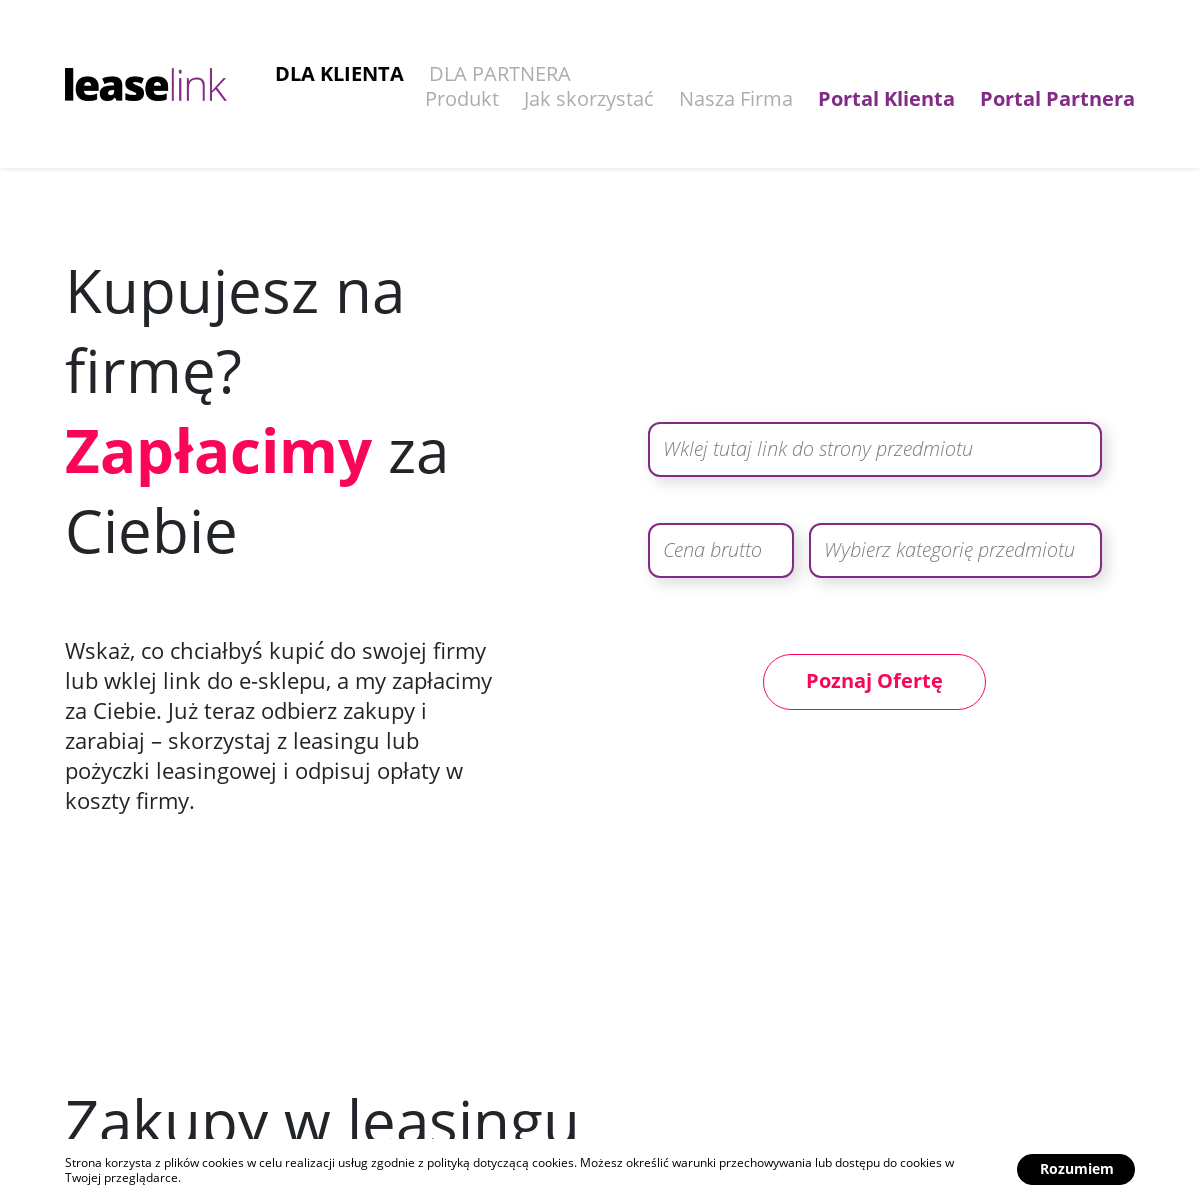 A complete backup of leaselink.pl